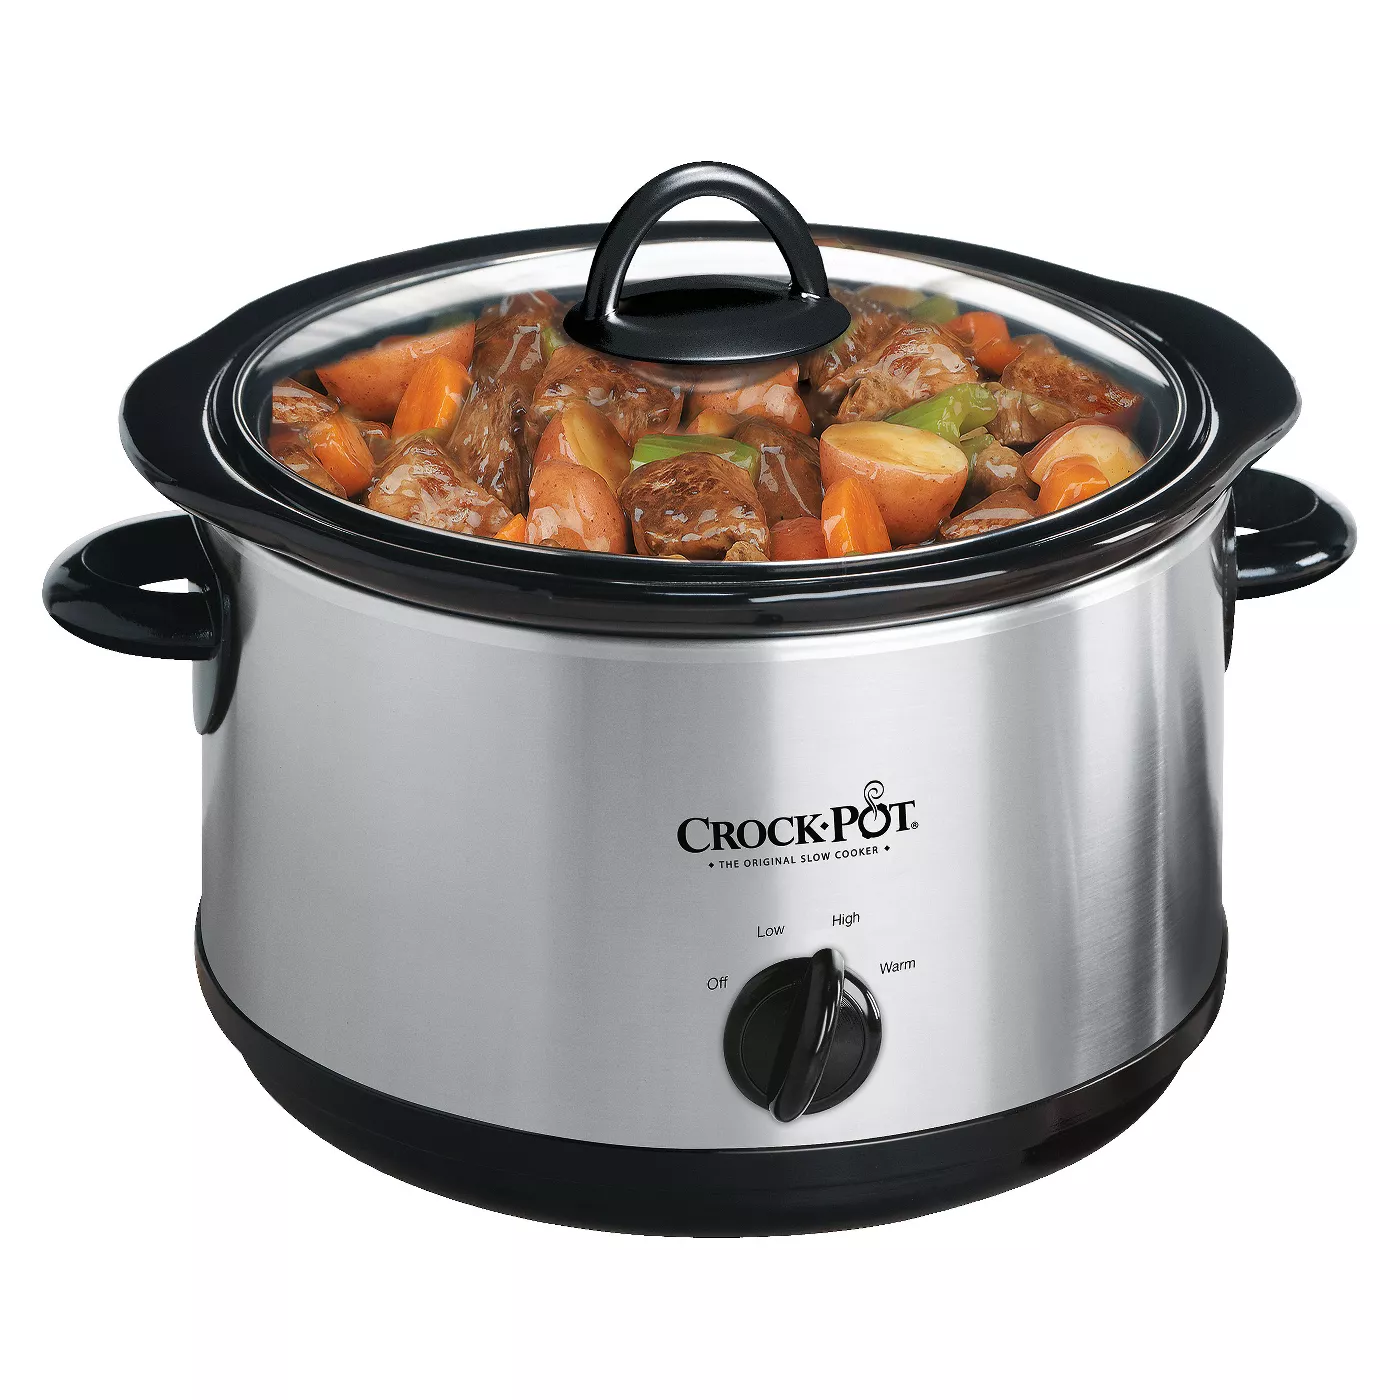 Crock-Pot 4.5qt Manual Slow Cooker - Silver SCR450-S - image 2 of 4